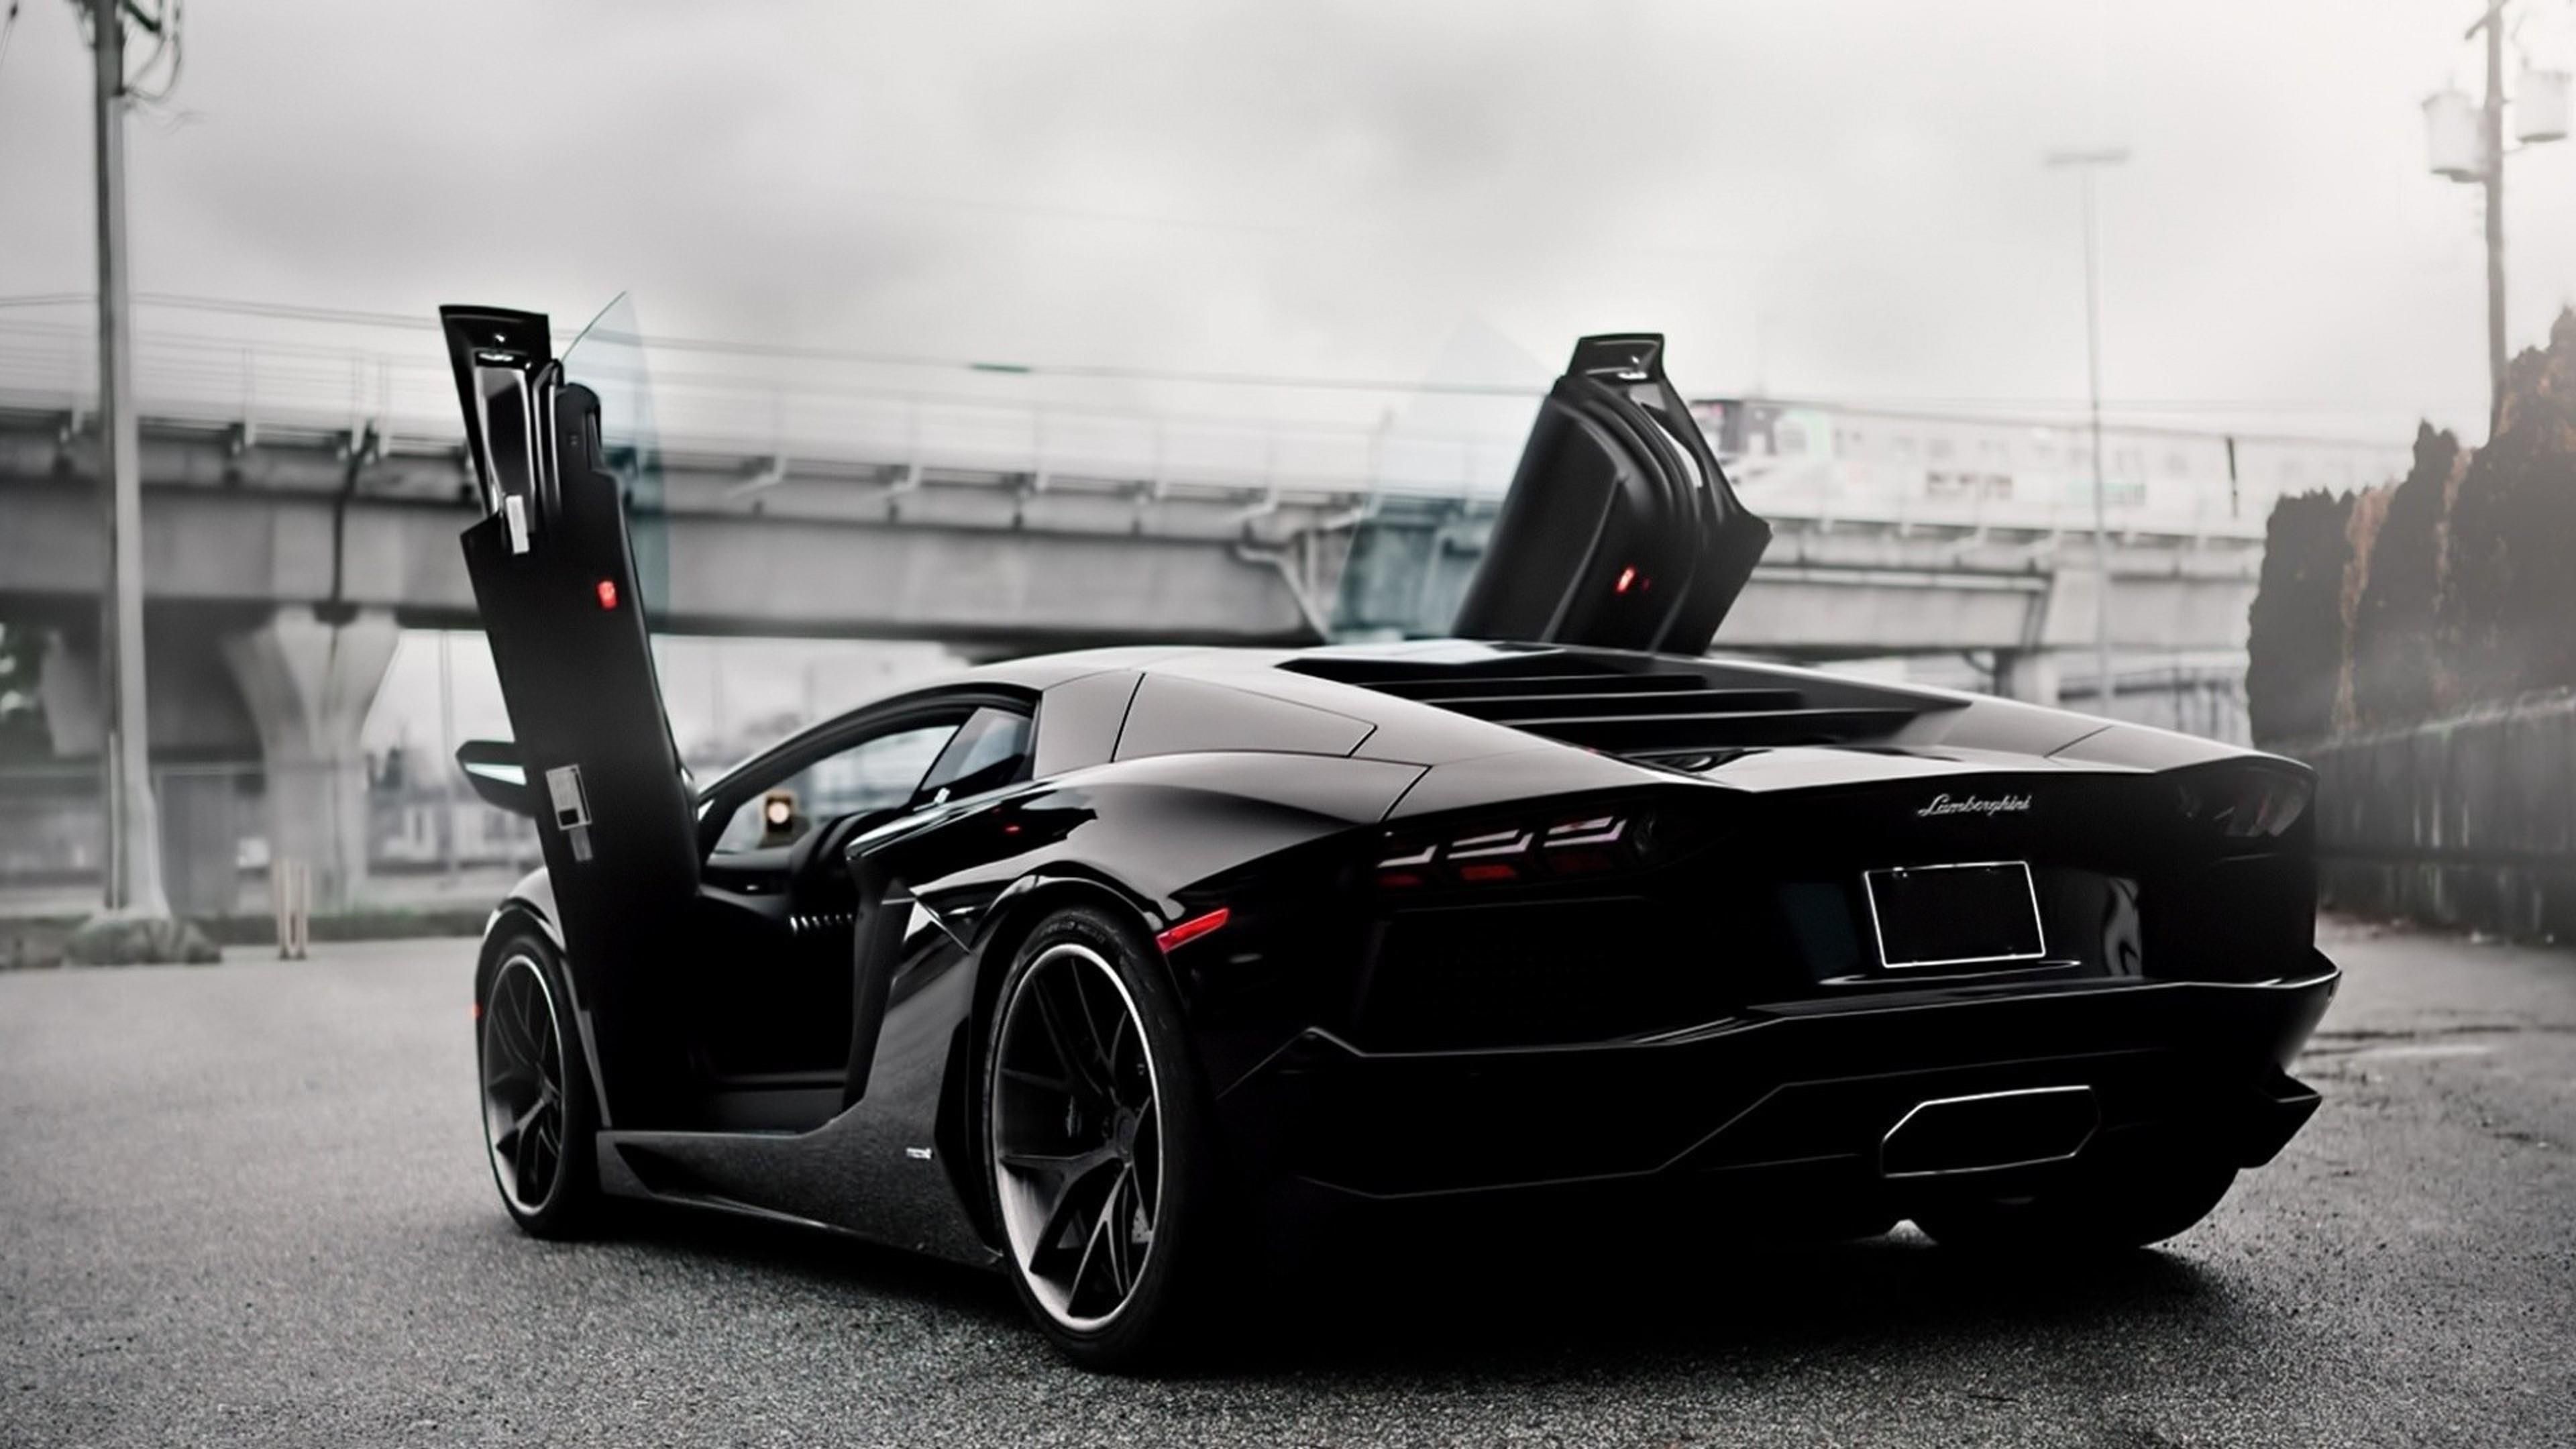 Black Lamborghini Aventador Doors Up, HD Cars, 4k Wallpaper, Image, Background, Photo and Picture